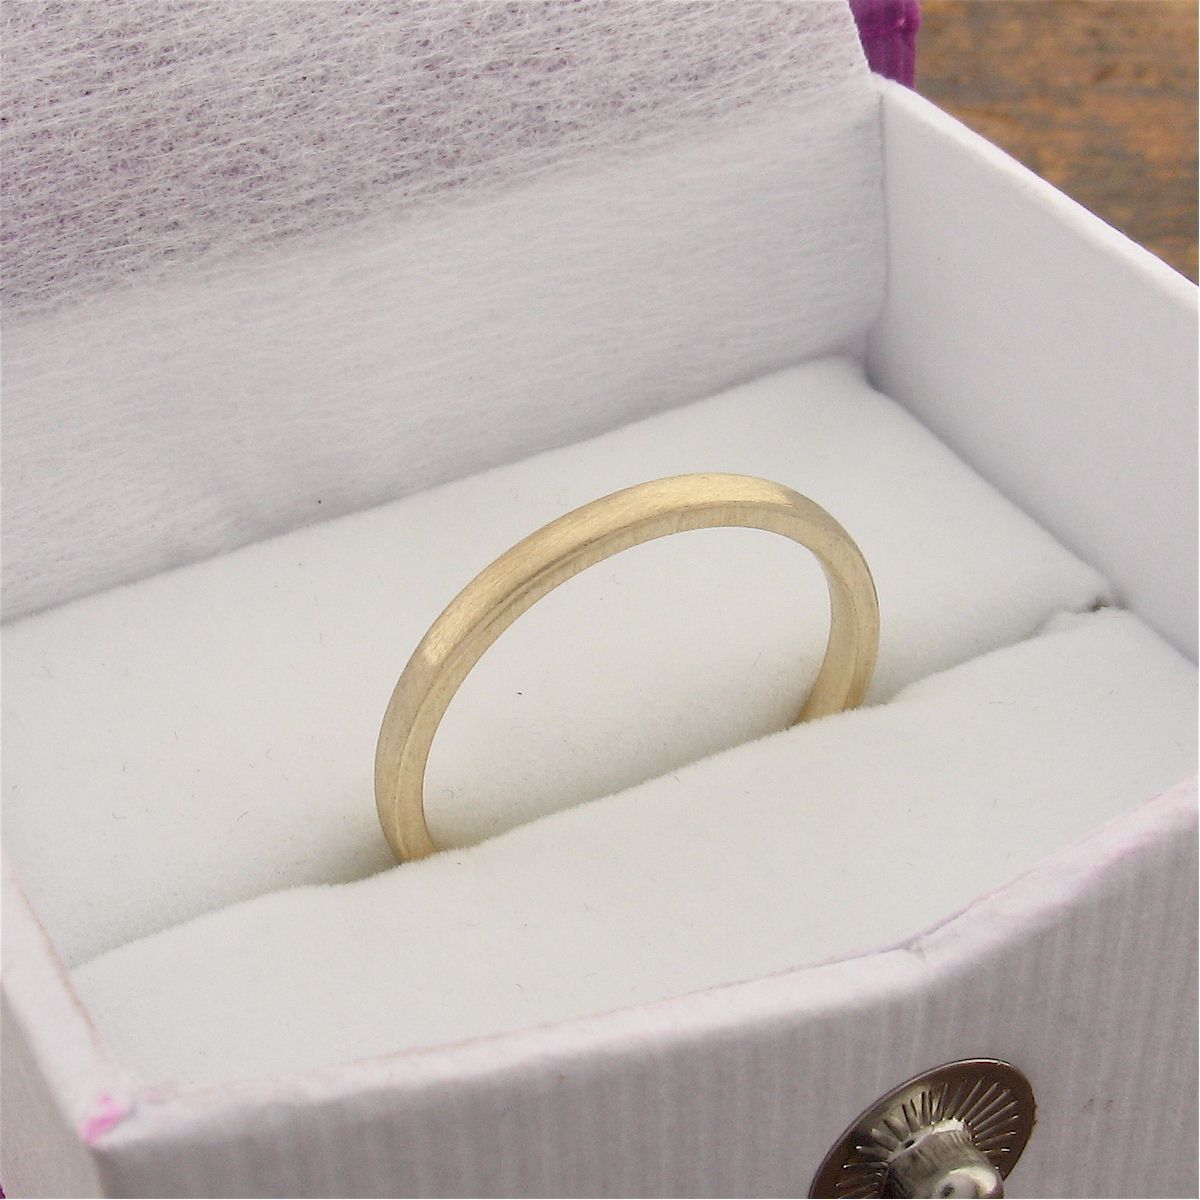 Gold court thin wedding ring. - Cumbrian Designs